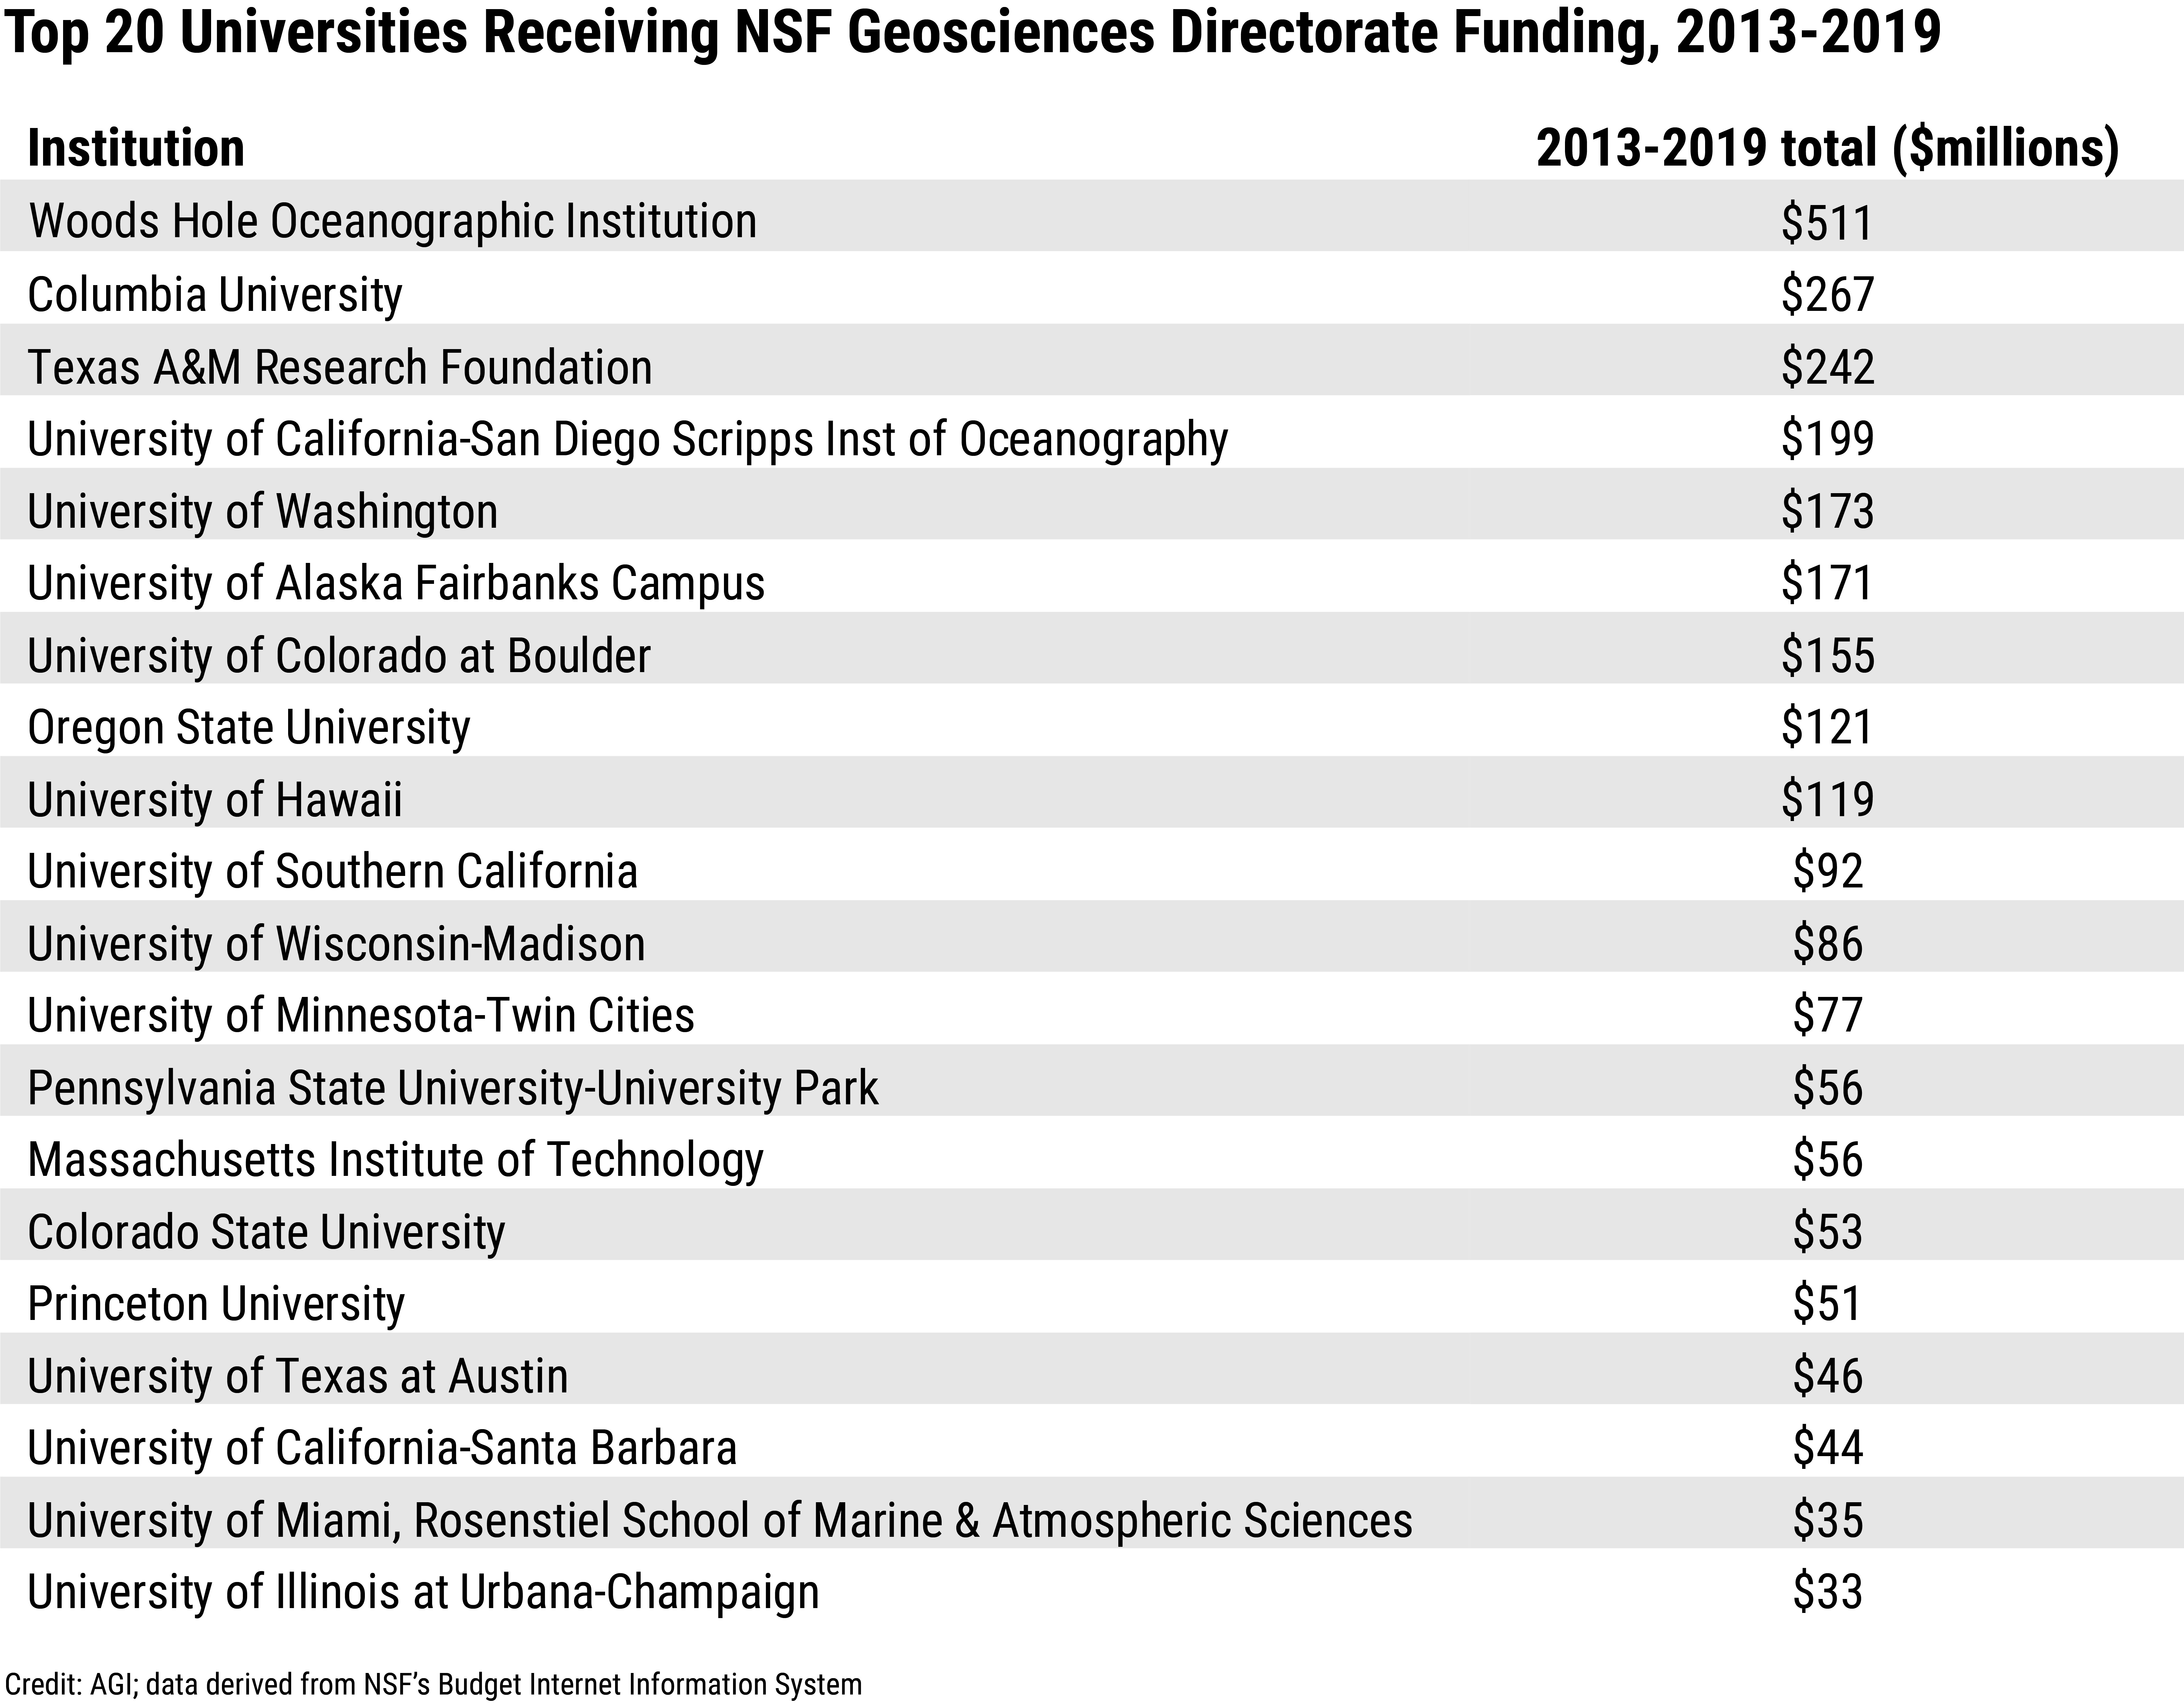 Data Brief 2020-001 table 01: Top 20 Universities Receiving NSF Geosciences Directorate Funding, 2013-2019 (credit: AGI; data derived from NSF BIIS)